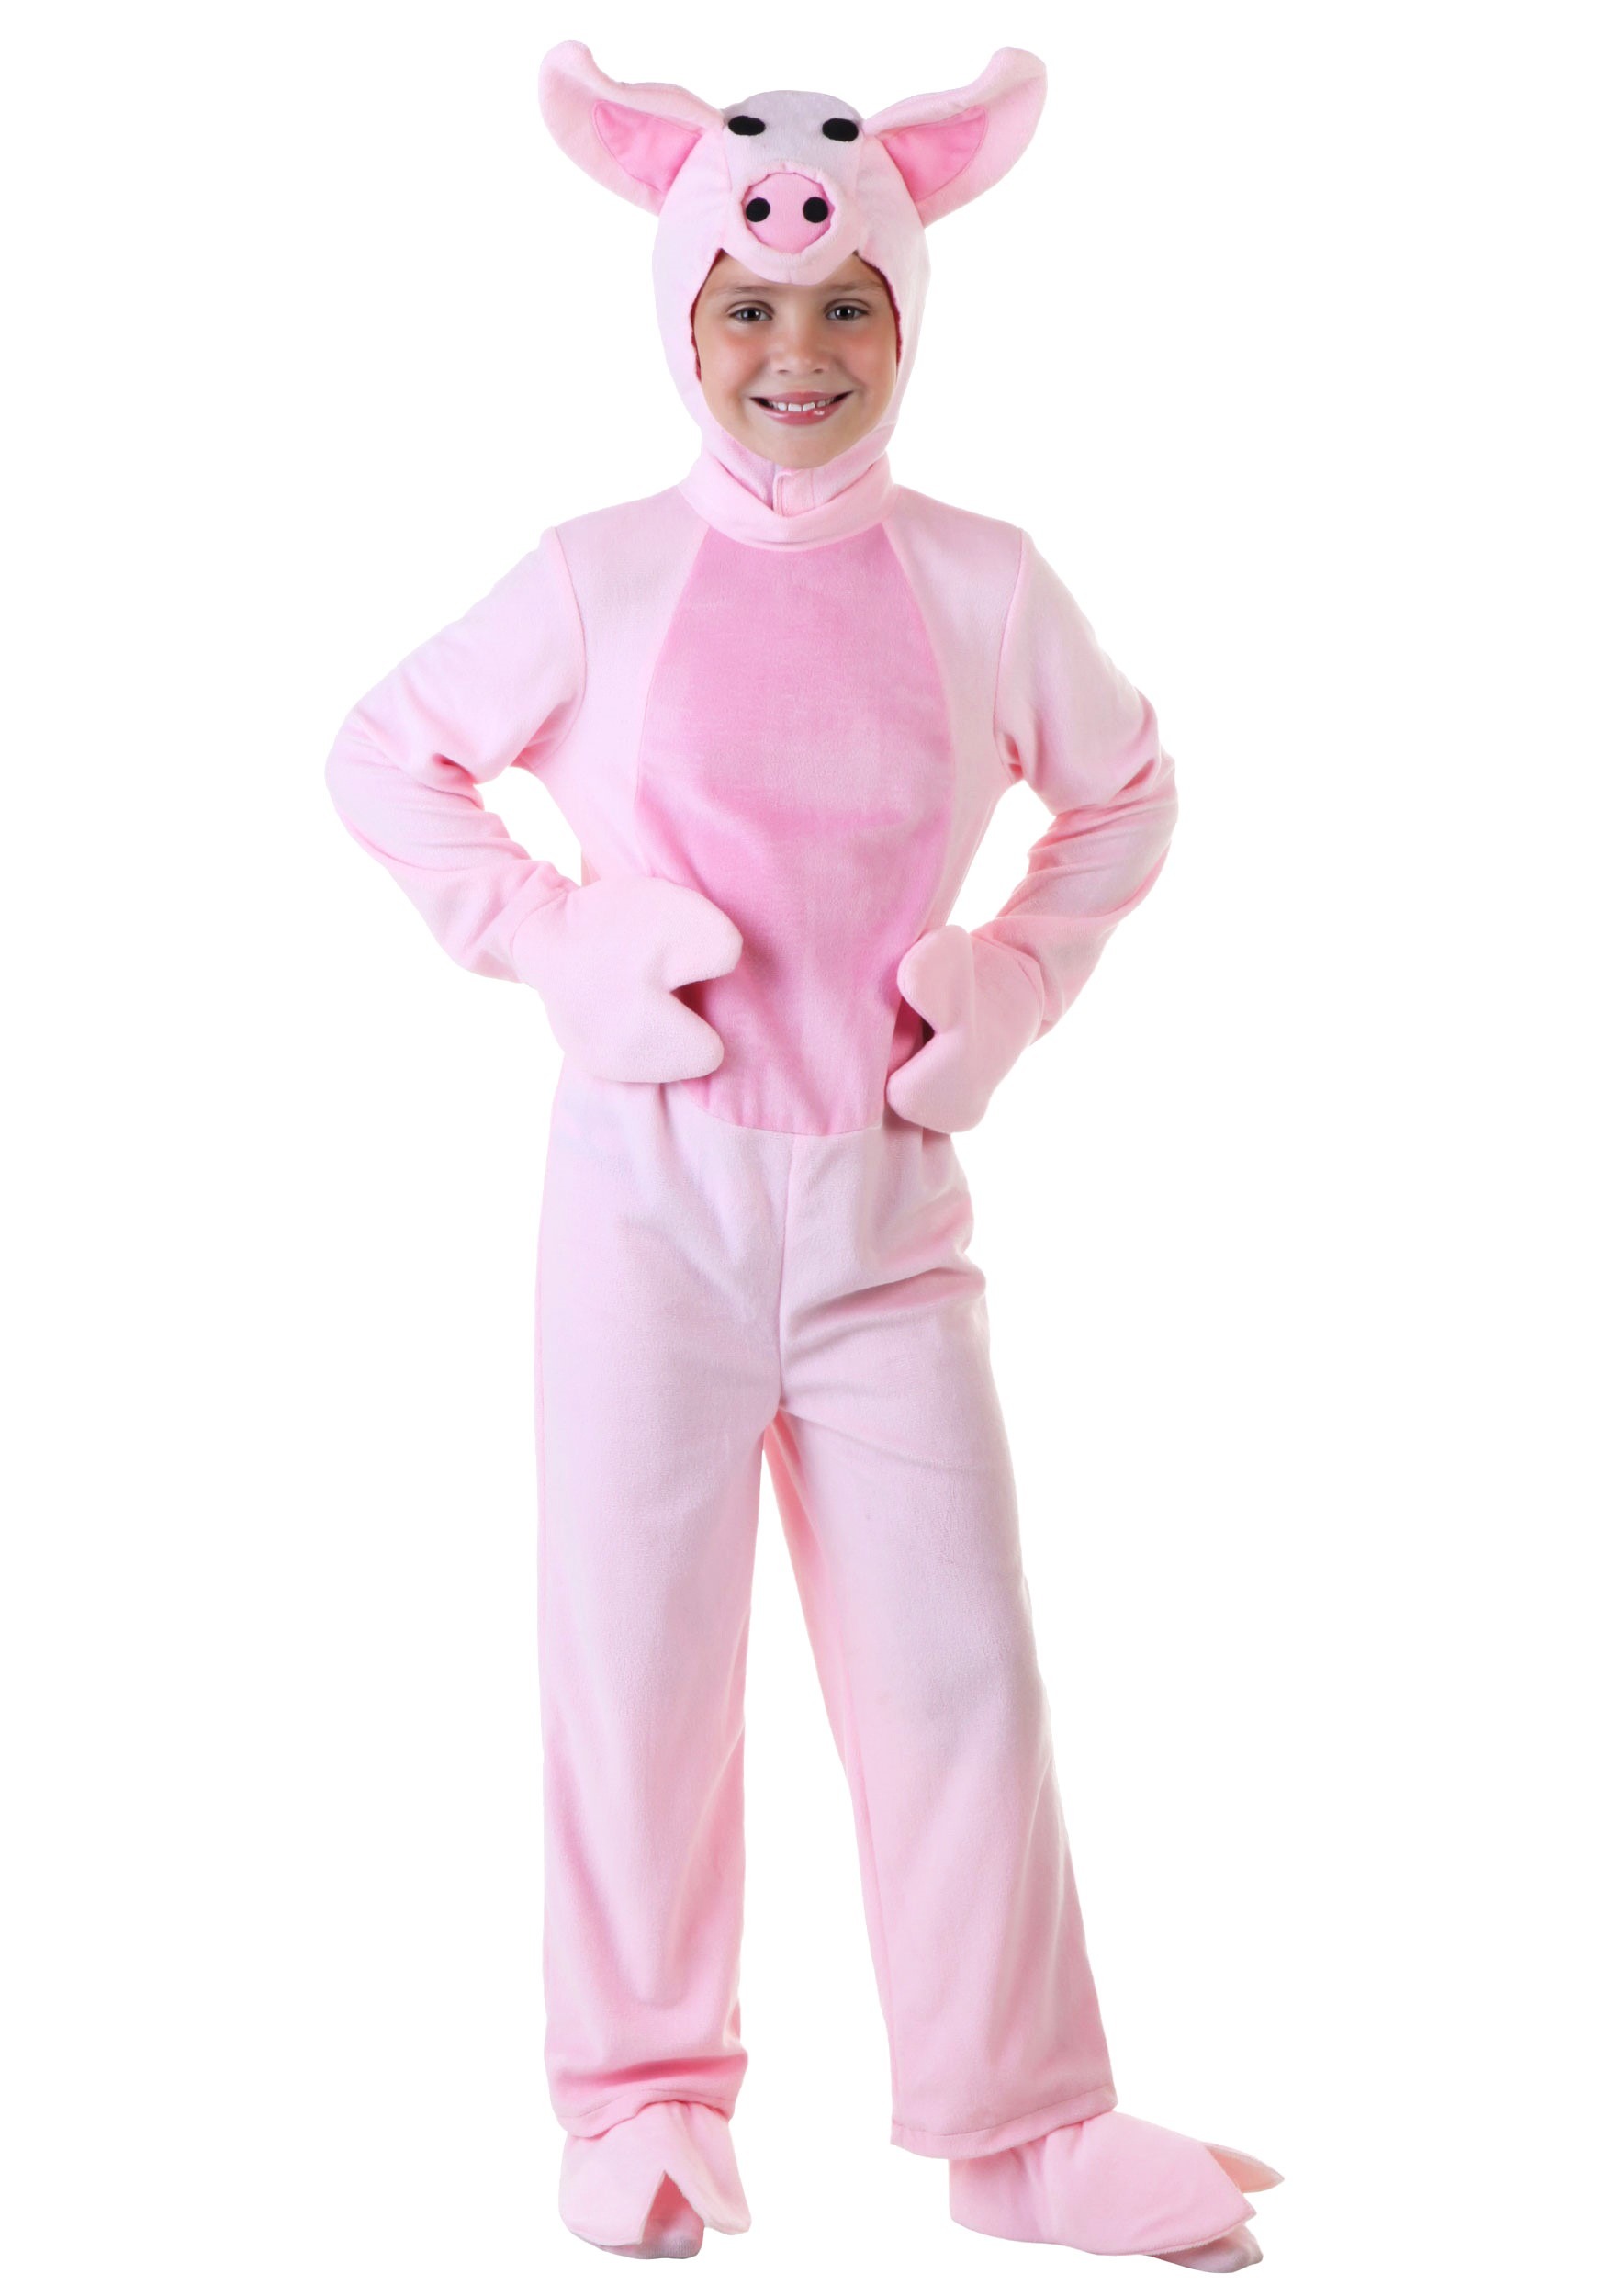 Photos - Fancy Dress FUN Costumes Pink Pig Costume for Kids | Farm Animal Halloween Costume | E